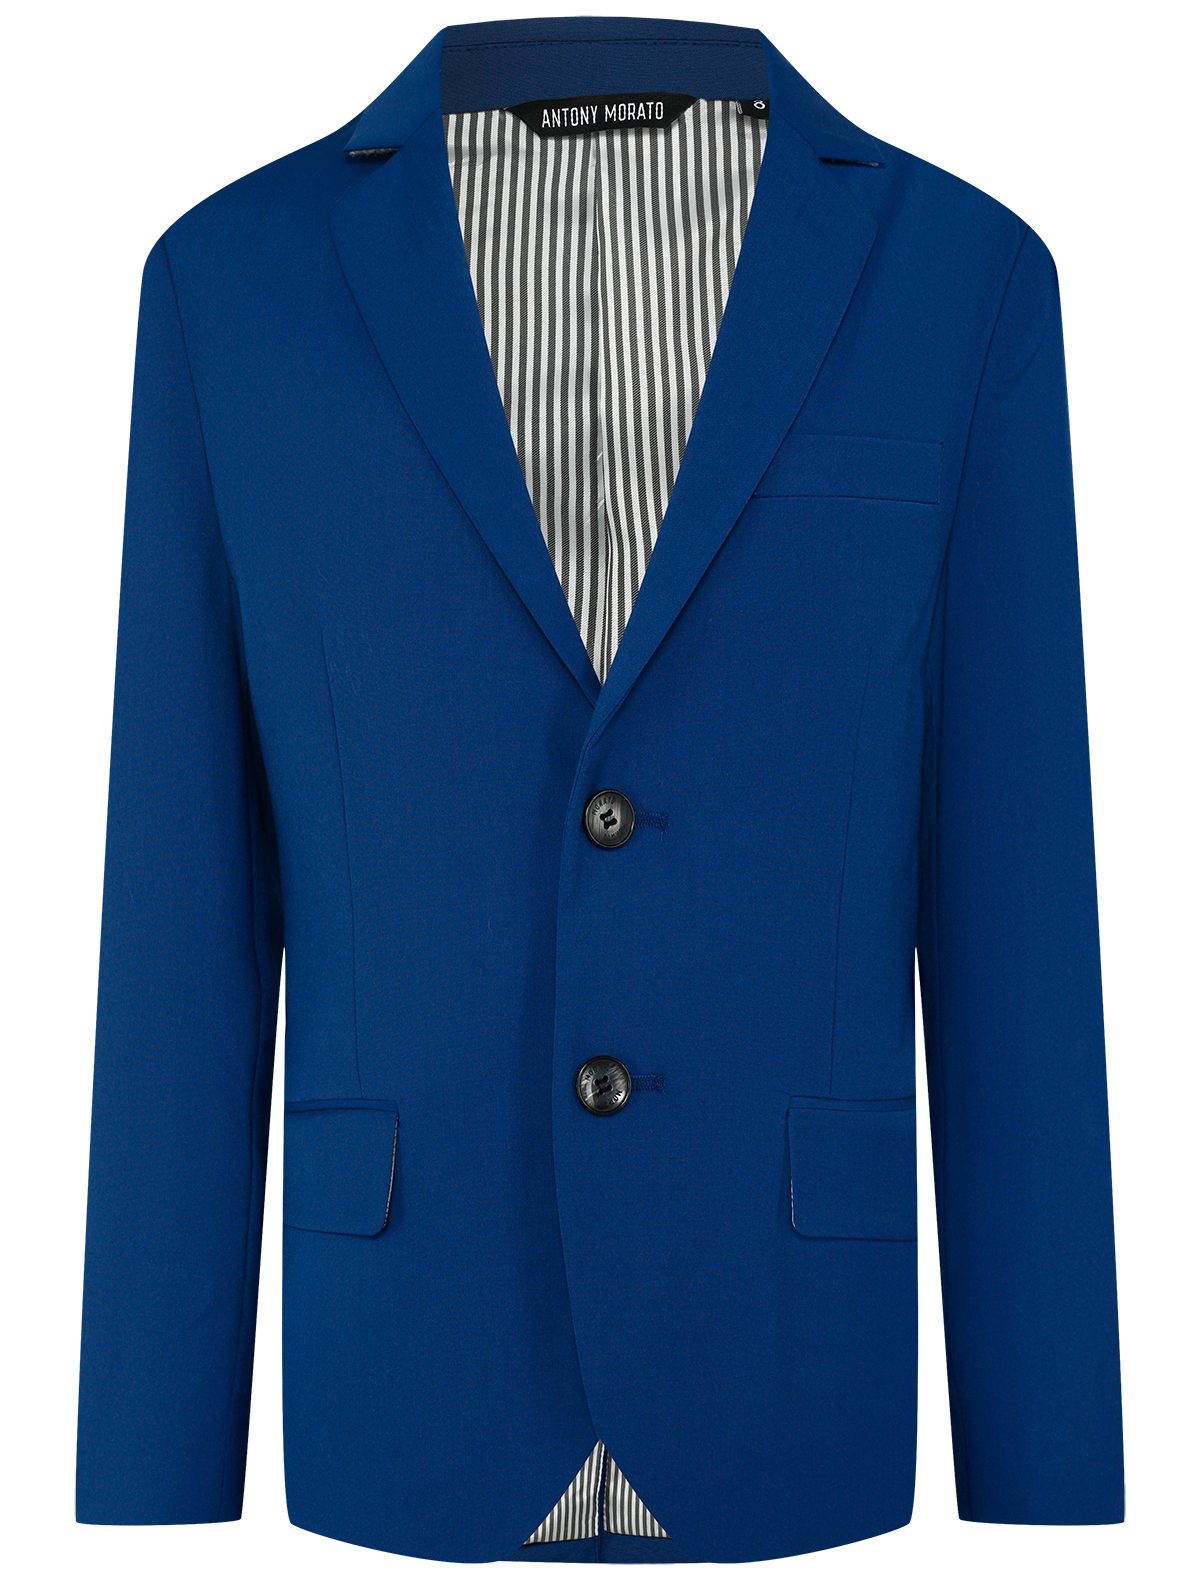 Пиджак Antony Morato 2543897, цвет синий, размер 7 1334519370835 - фото 1